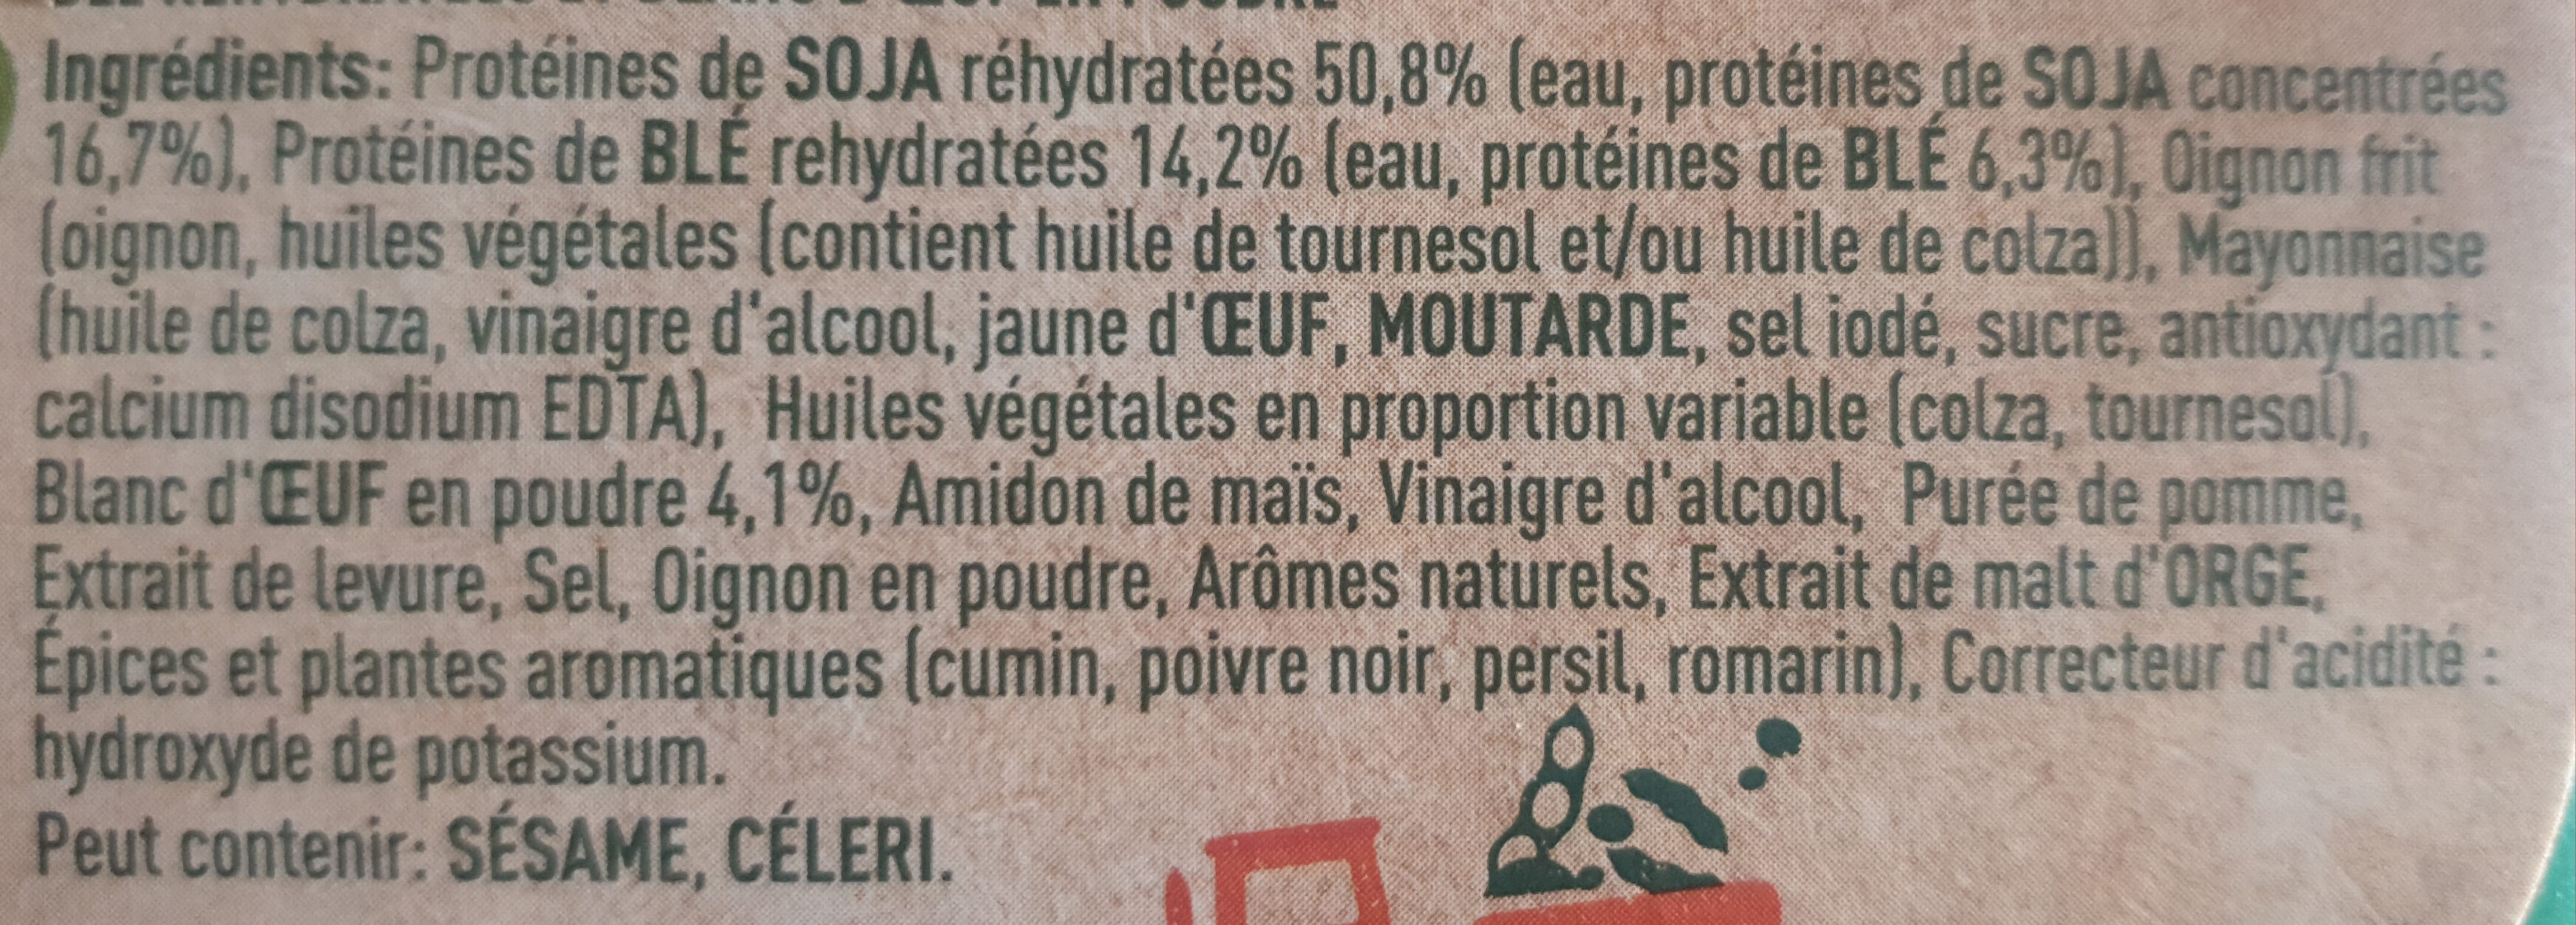 GARDEN GOURMET Le Classique Soja et Blé 150g - Ingrediënten - fr